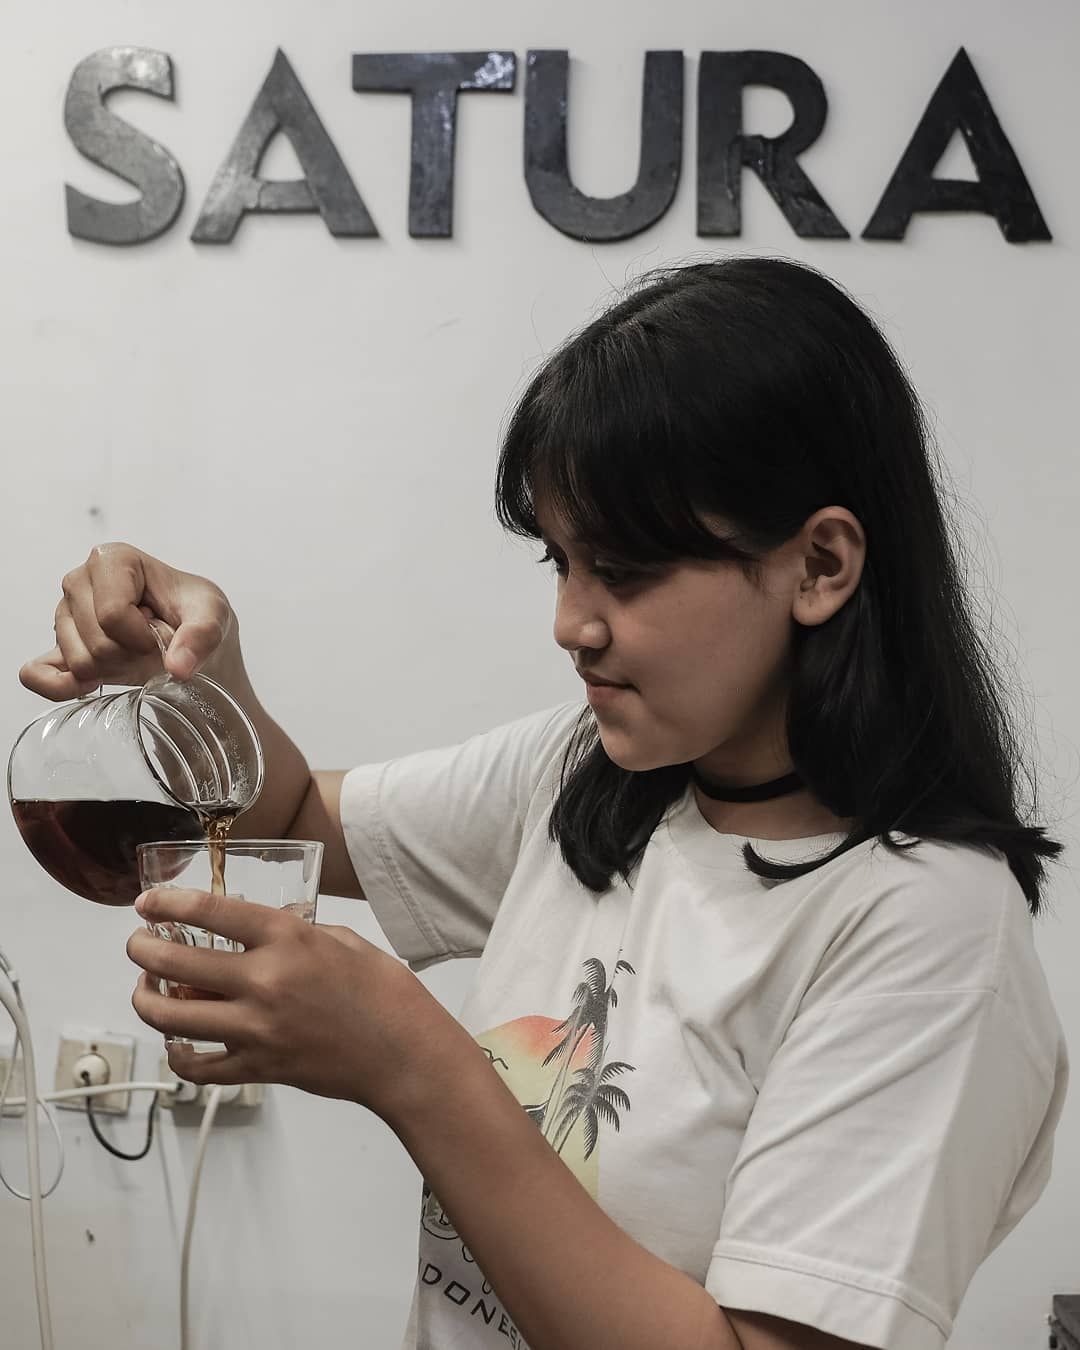 Satura Coffee